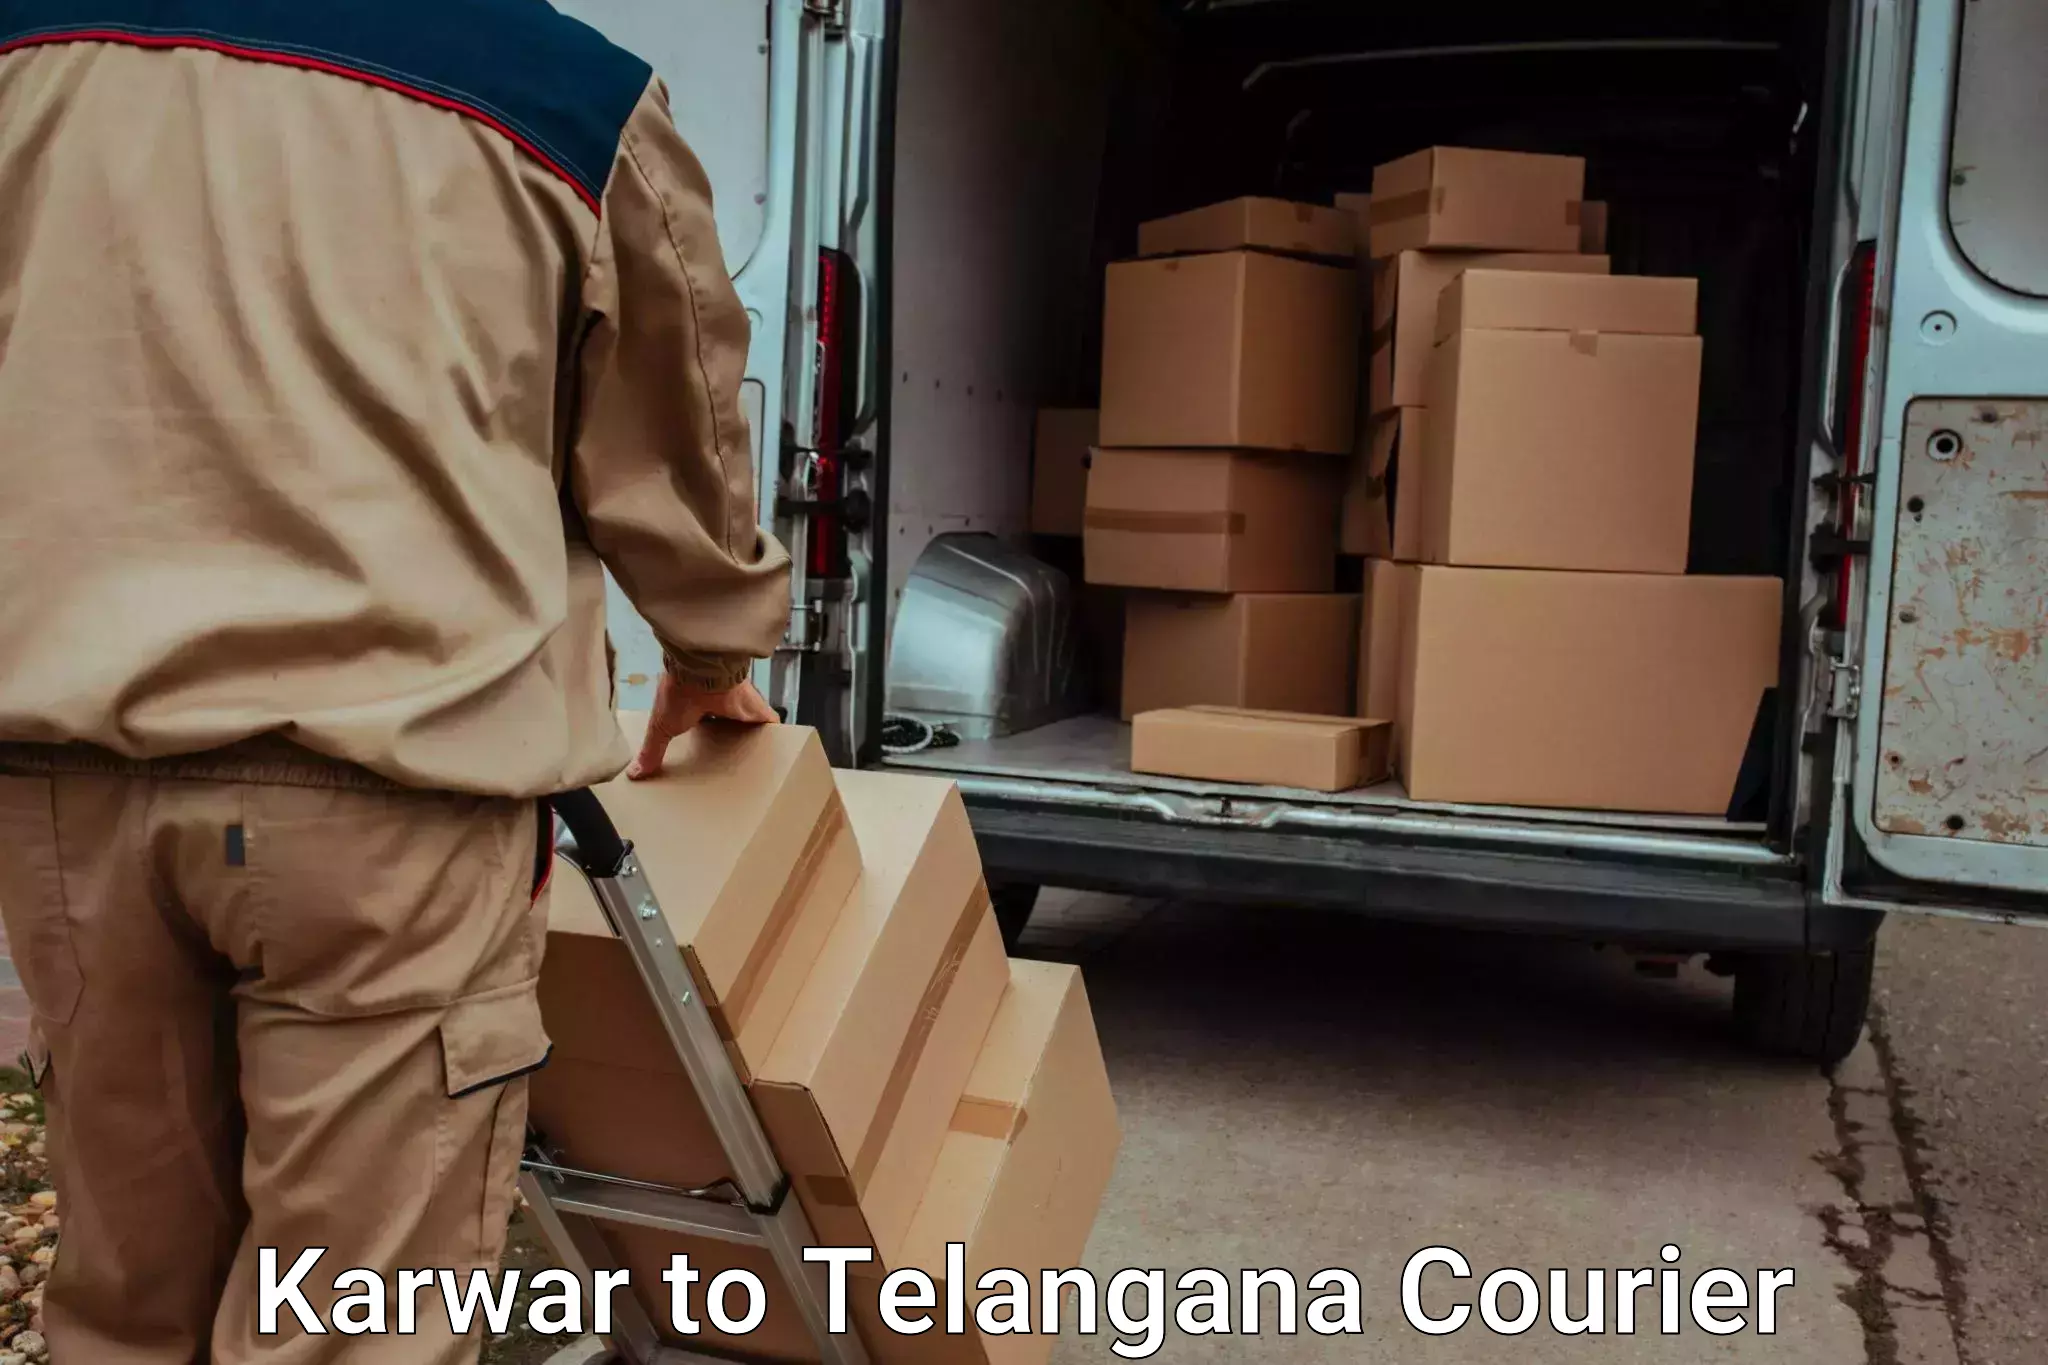 Furniture transport specialists Karwar to Sultanabad